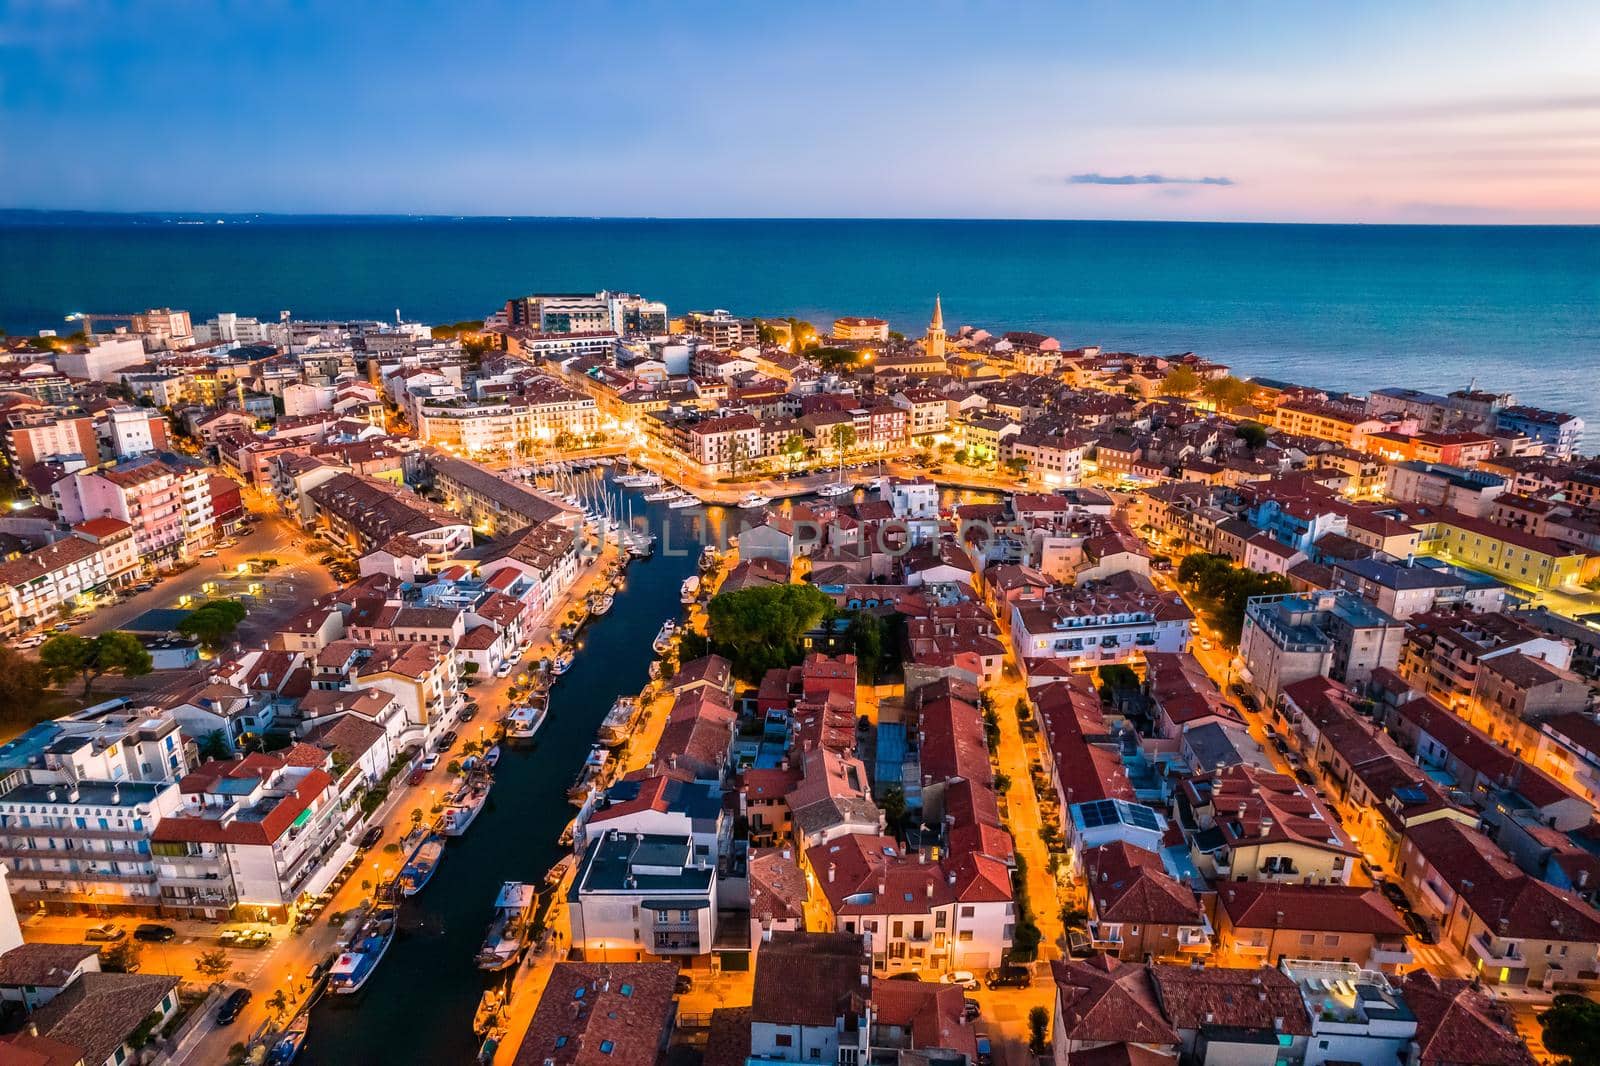 Town of Grado on Adriatic sea aerial evening view, Friuli-Venezia Giulia region of Italy